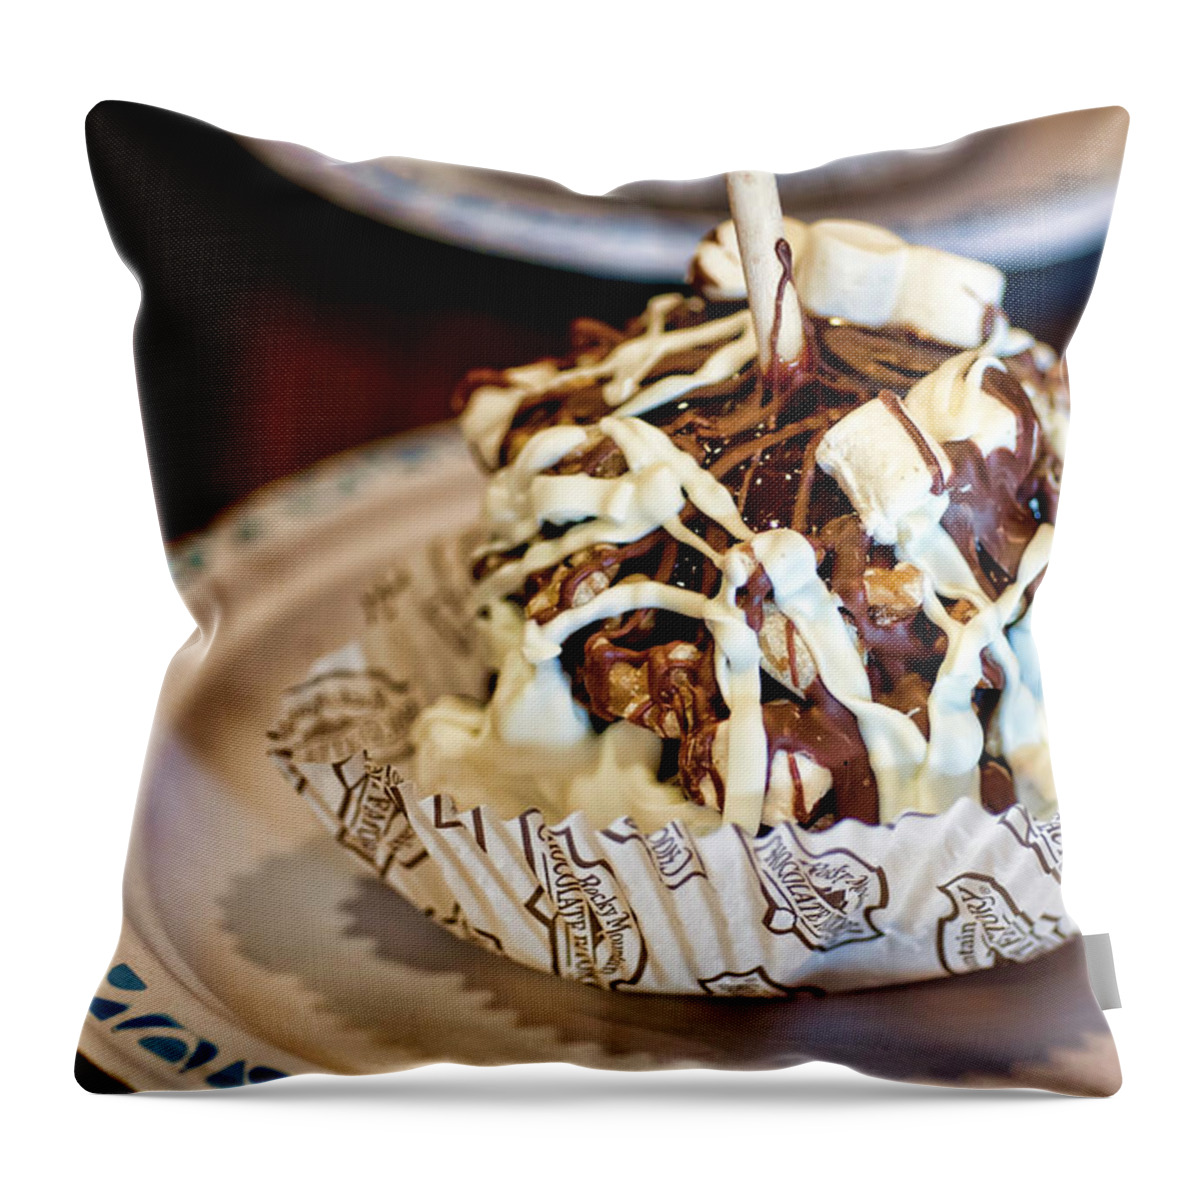 Food Throw Pillow featuring the photograph Chocolate Caramel Apple by Dan McManus